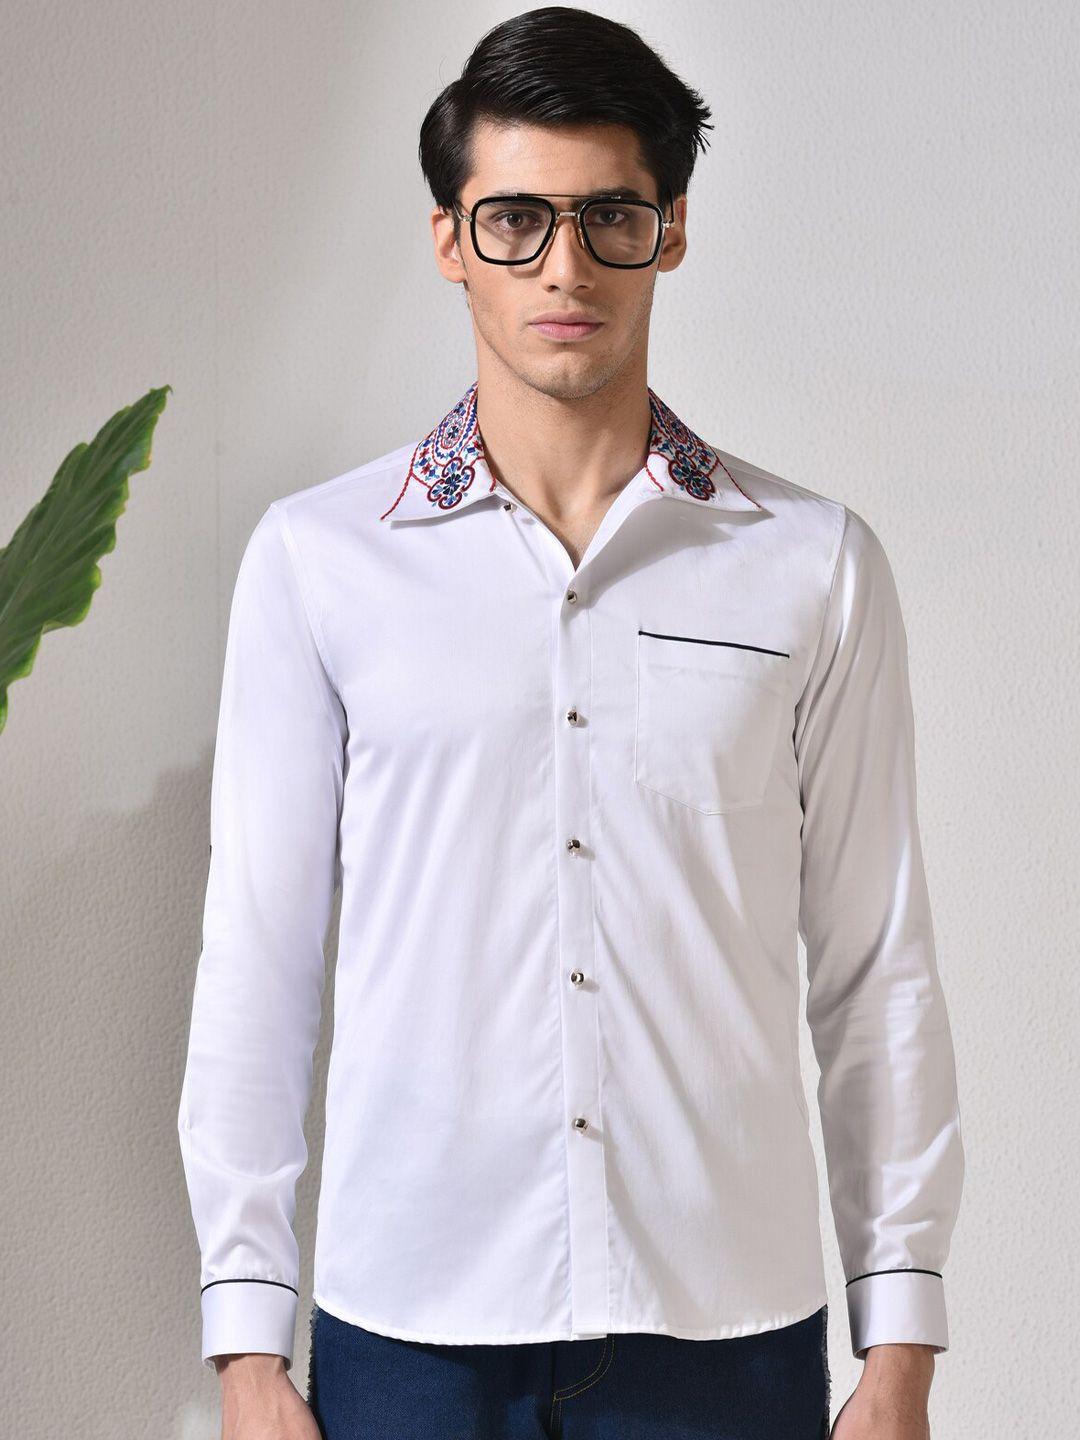 abkasa sharp slim fit opaque cotton casual shirt